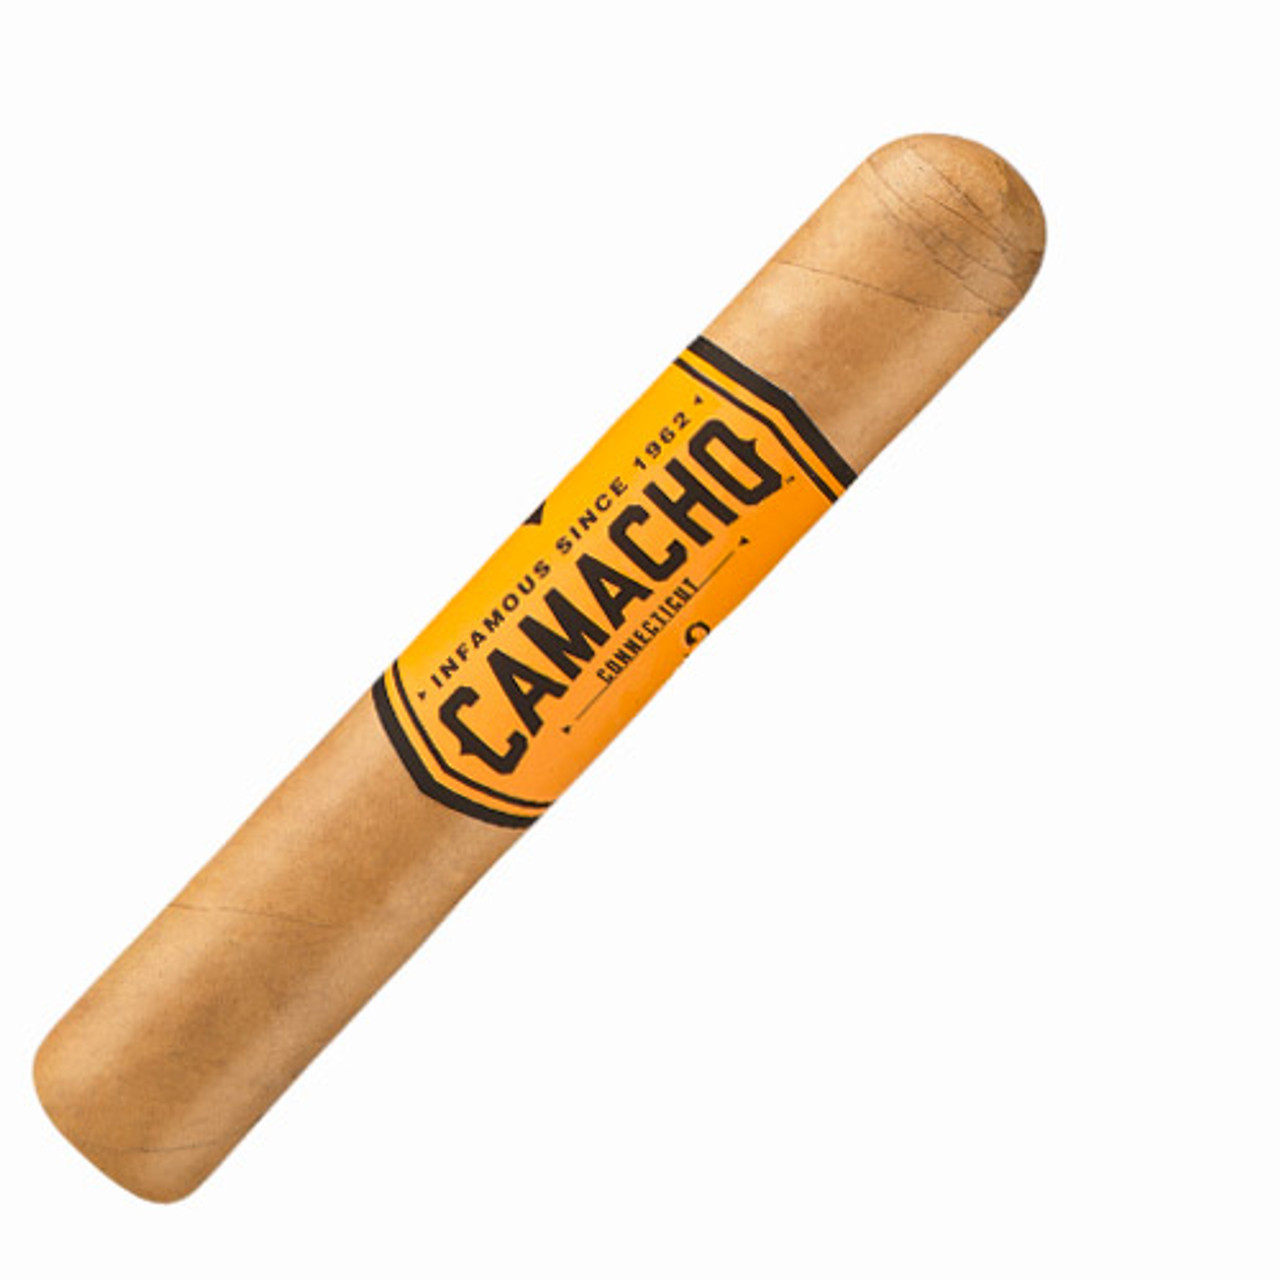 Camacho Connecticut Robusto Tubo Cigars - 5 x 50 Single